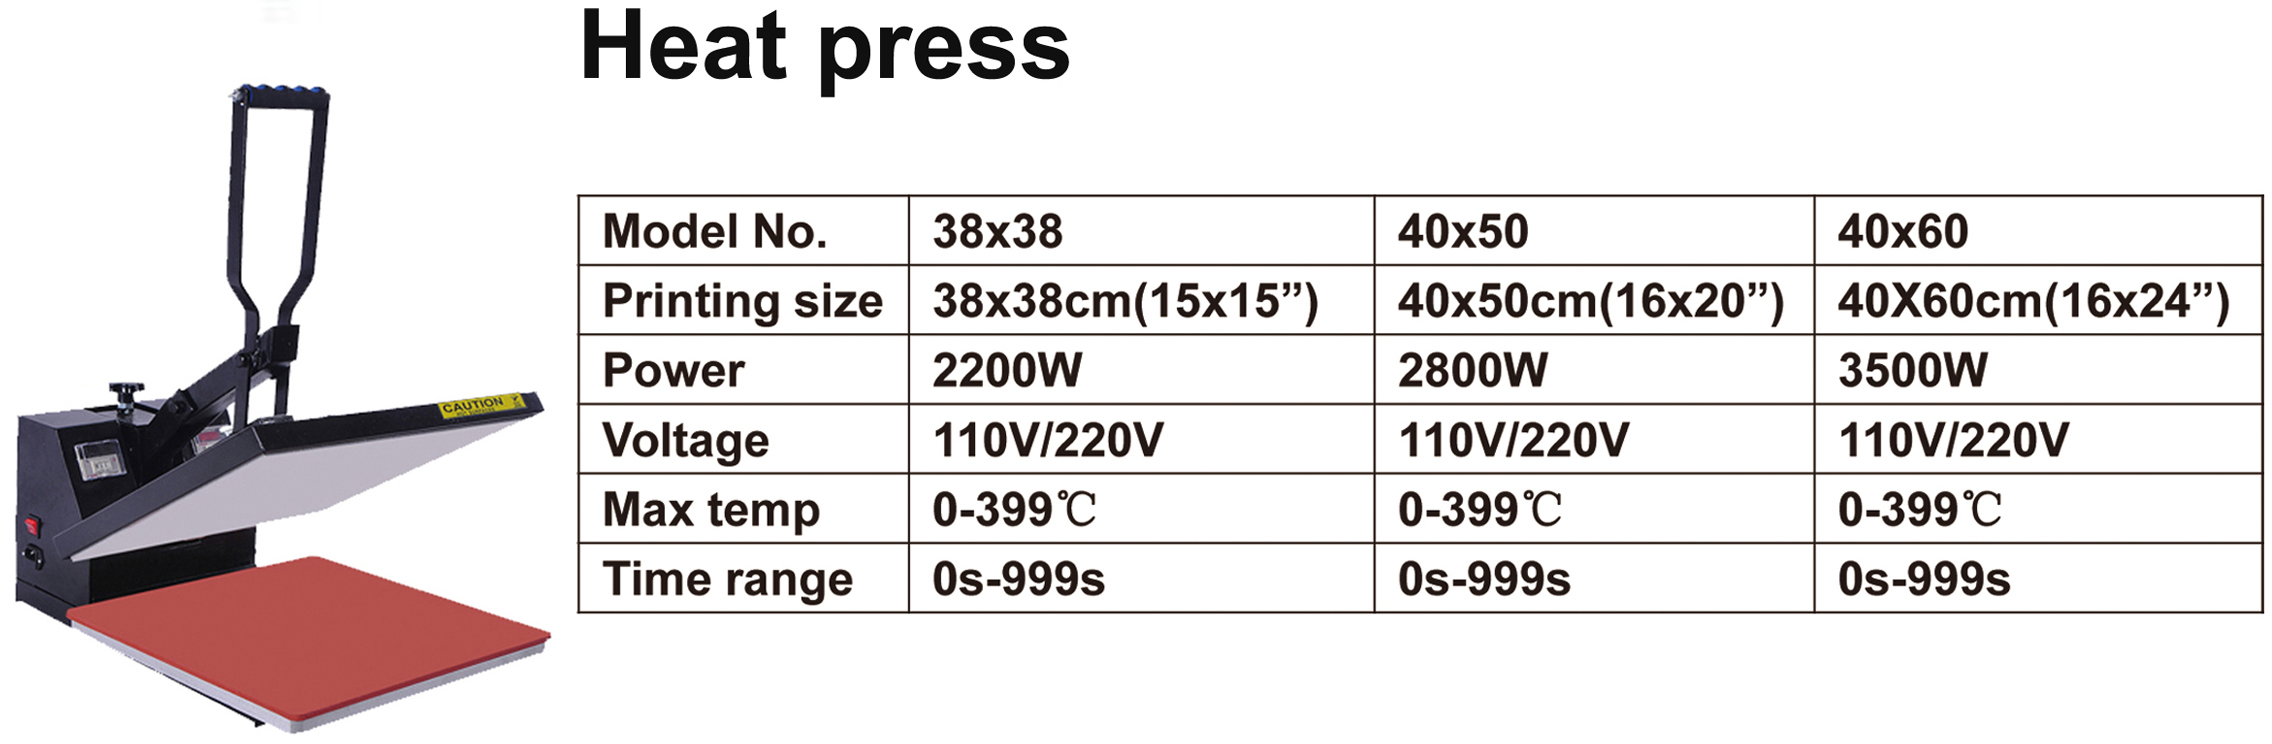 Heat press machine for sale 38x38 cm